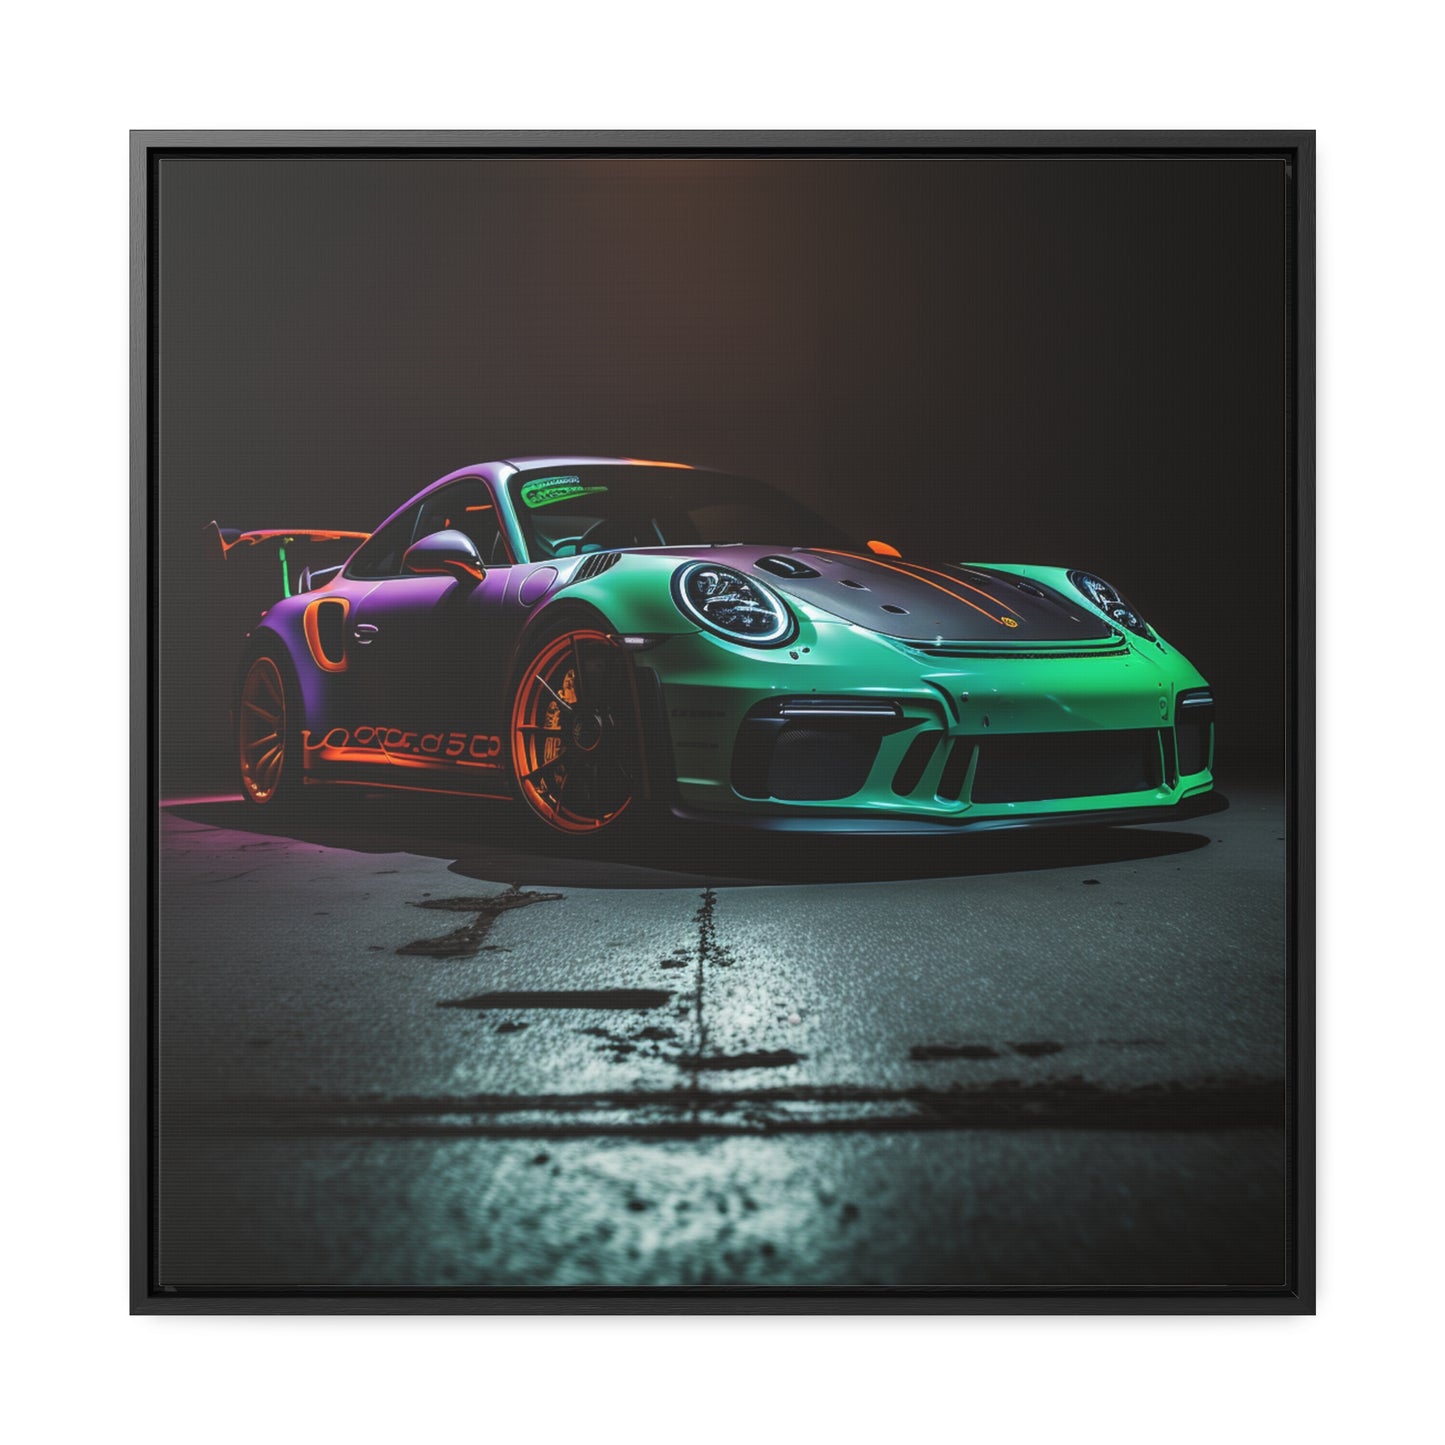 Gallery Canvas Wraps, Square Frame Porsche Color 4